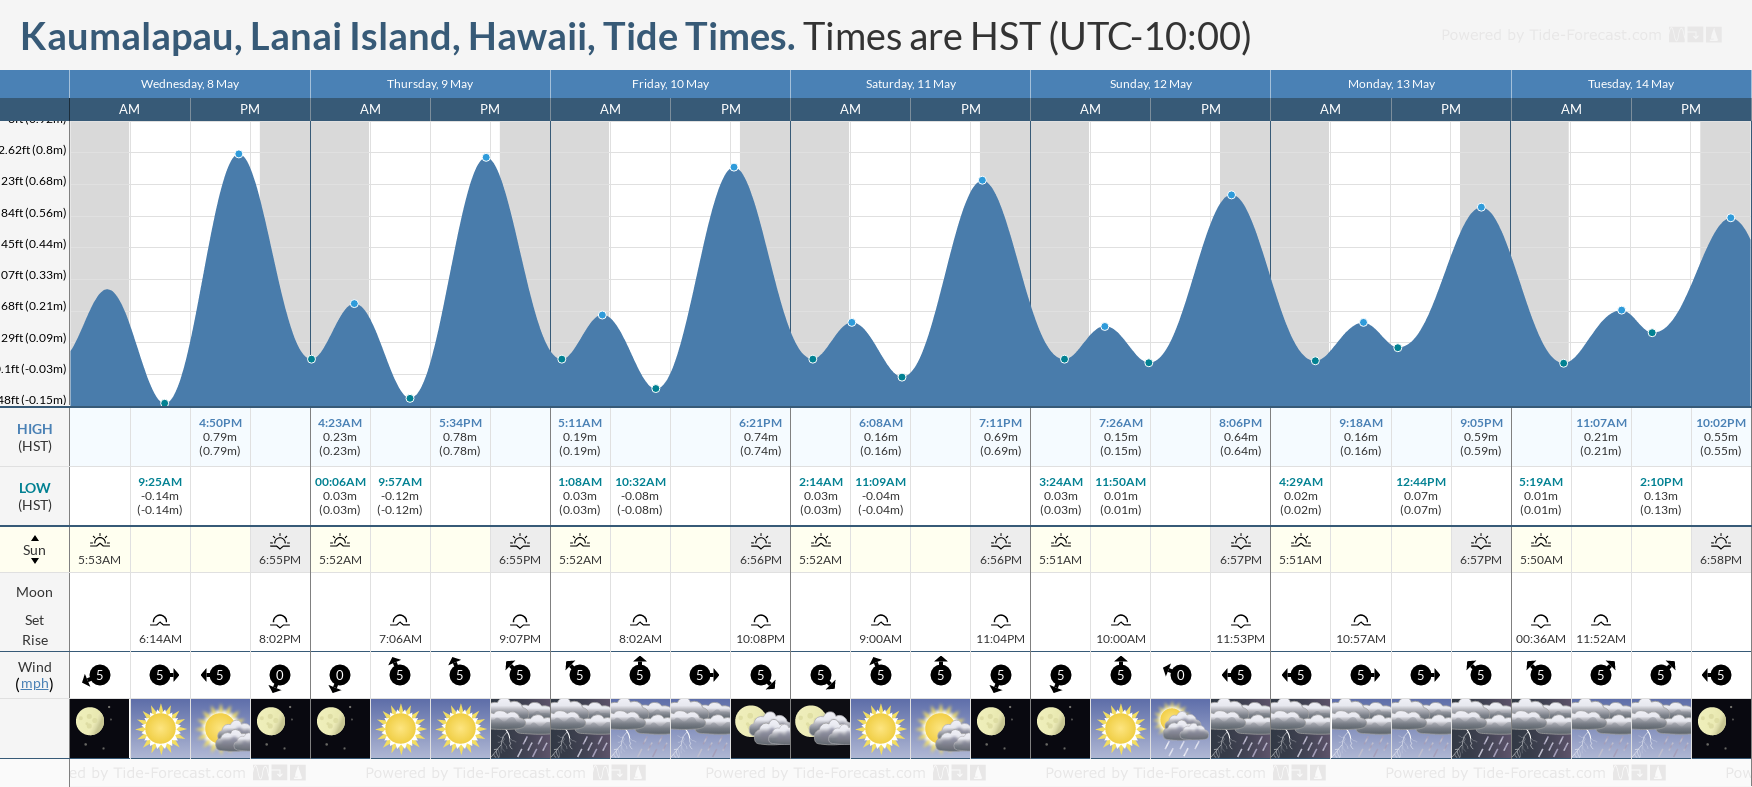 Kaumalapau, Lanai Island, Hawaii Tide Chart including high and low tide tide times for the next 7 days